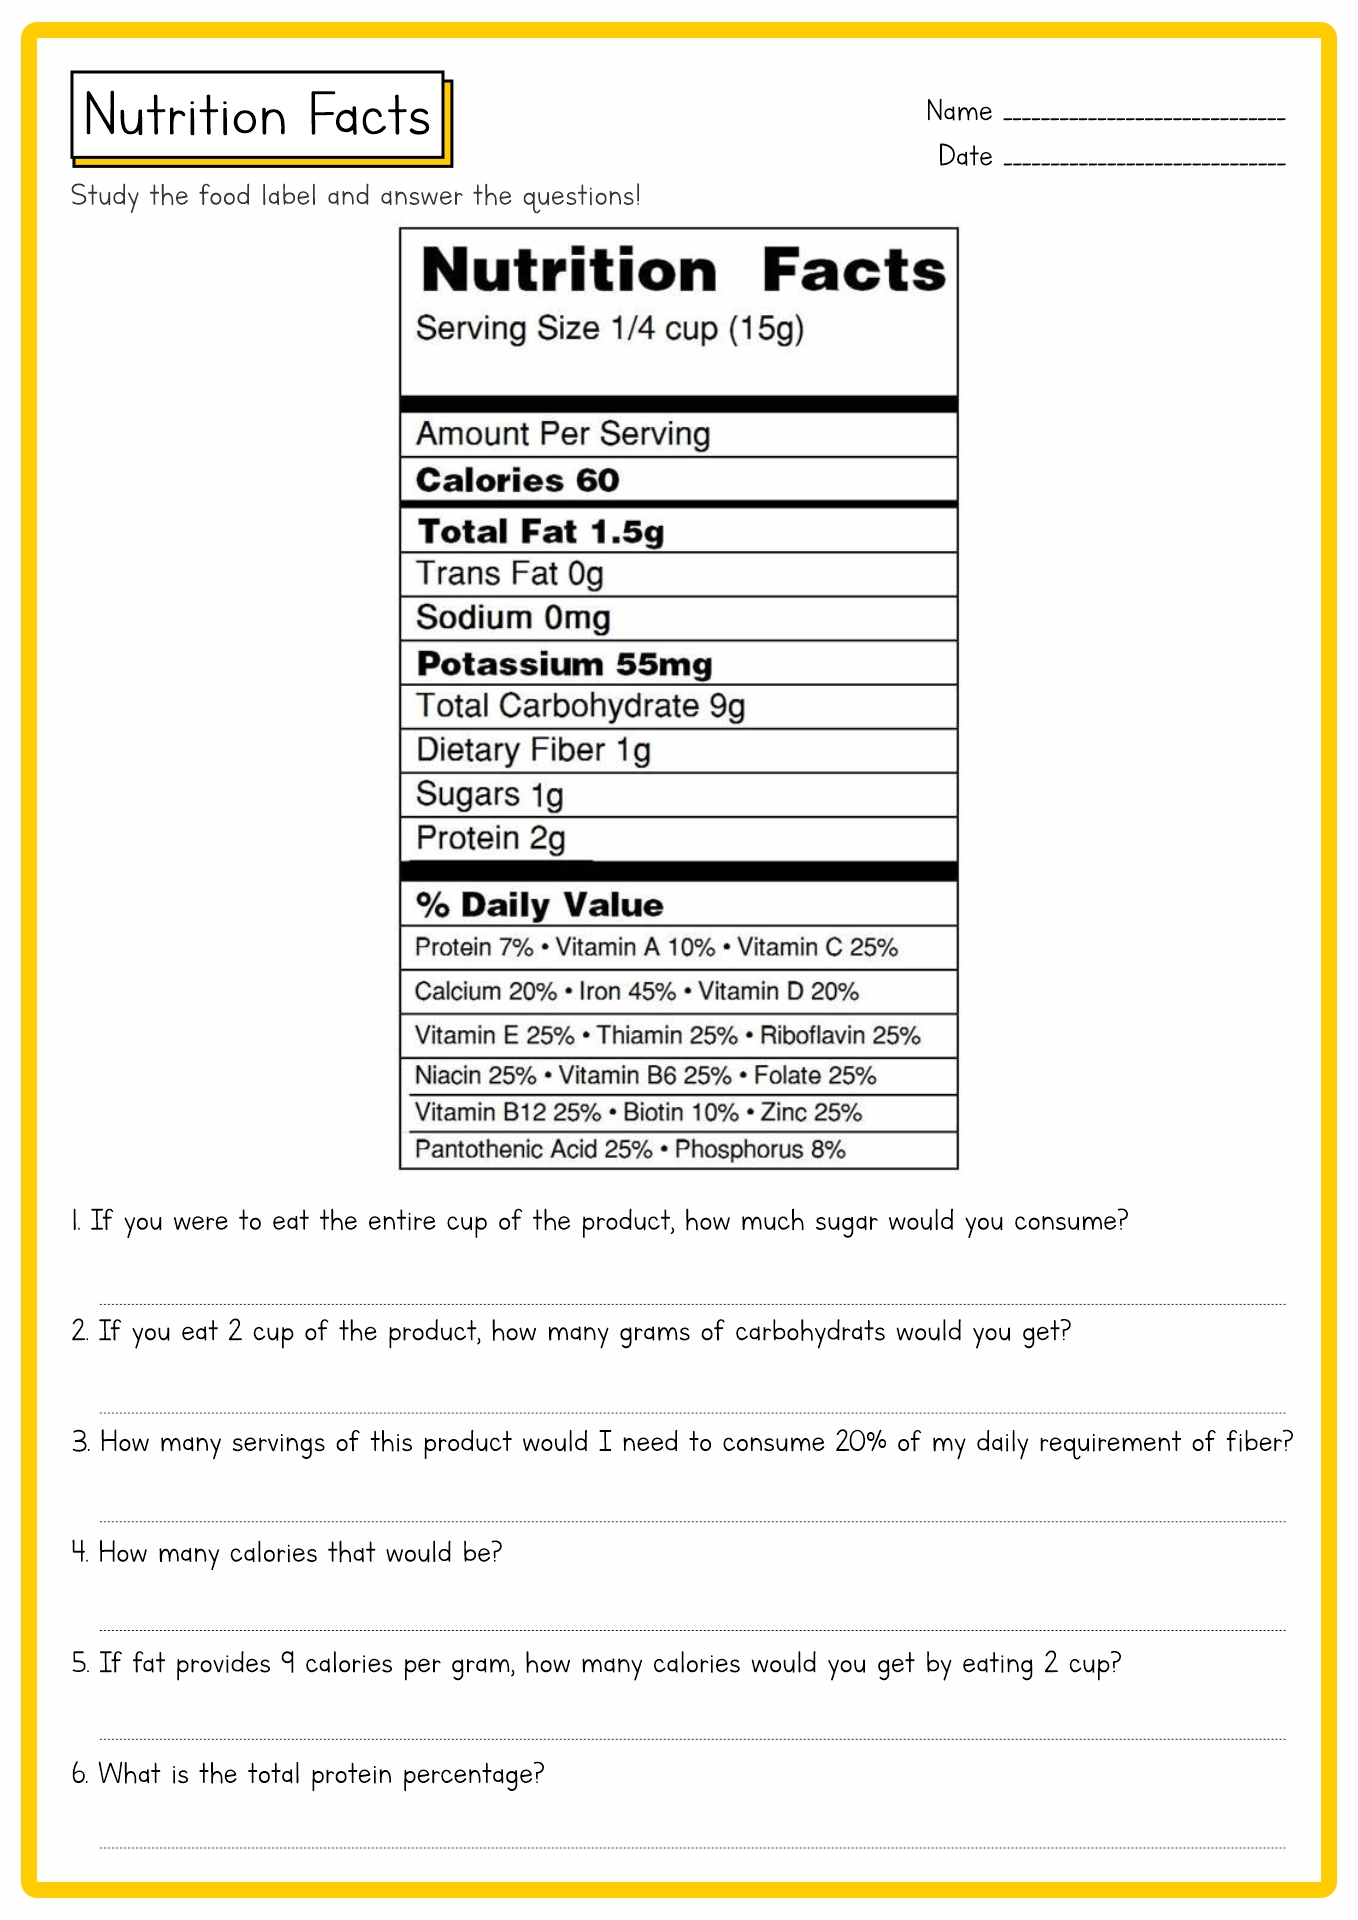 Blank Nutrition Facts Label Worksheet Image